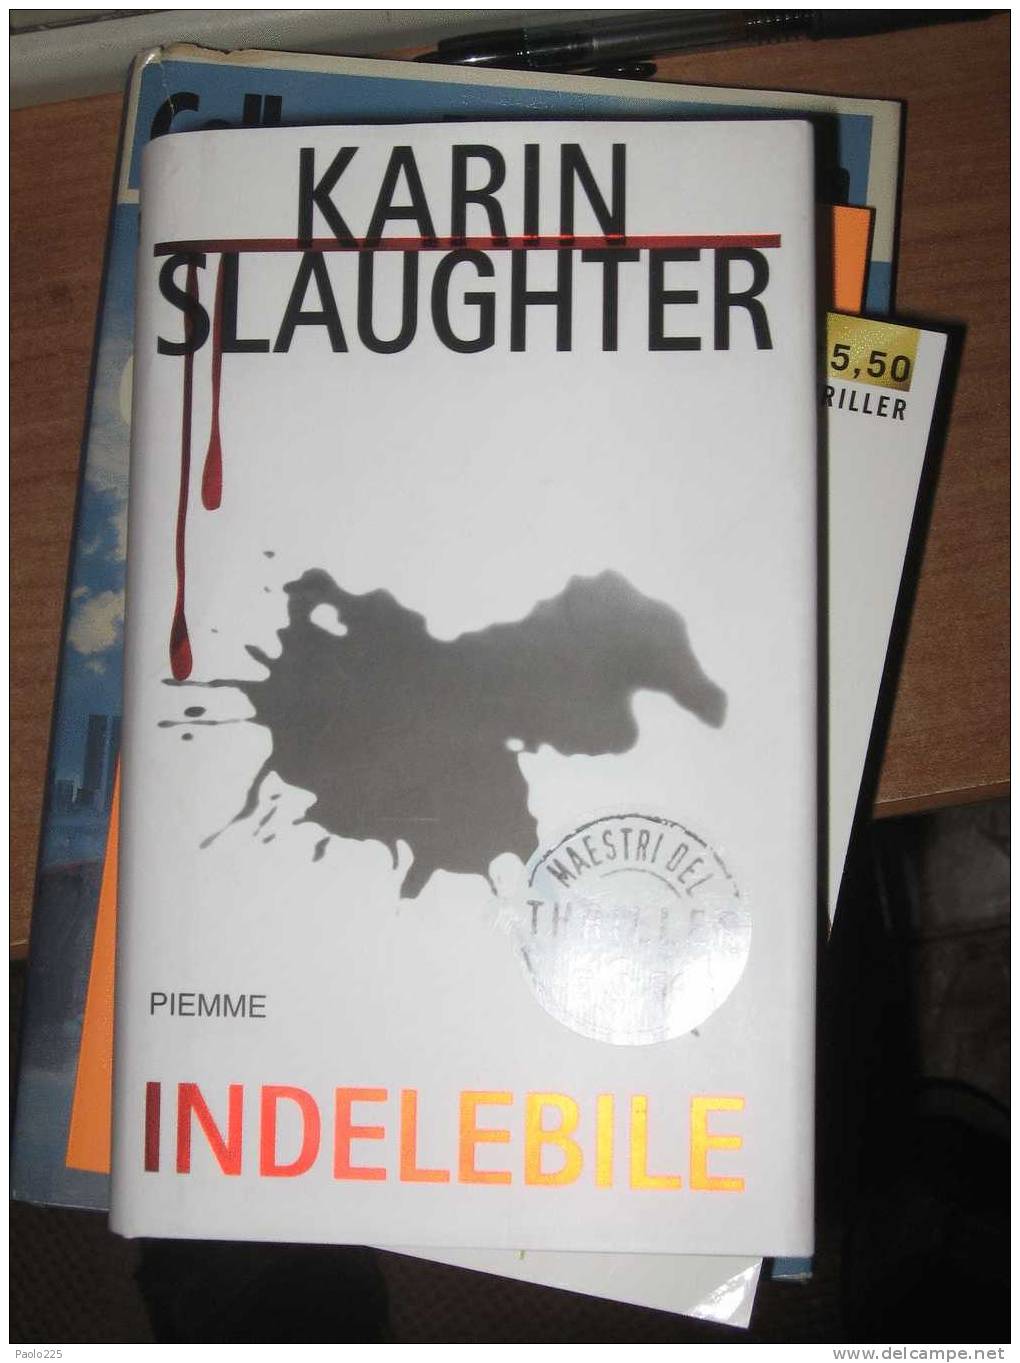 INDELEBILE - KARIN SLAUGHTER  - ED. PIEMME - Alte Bücher